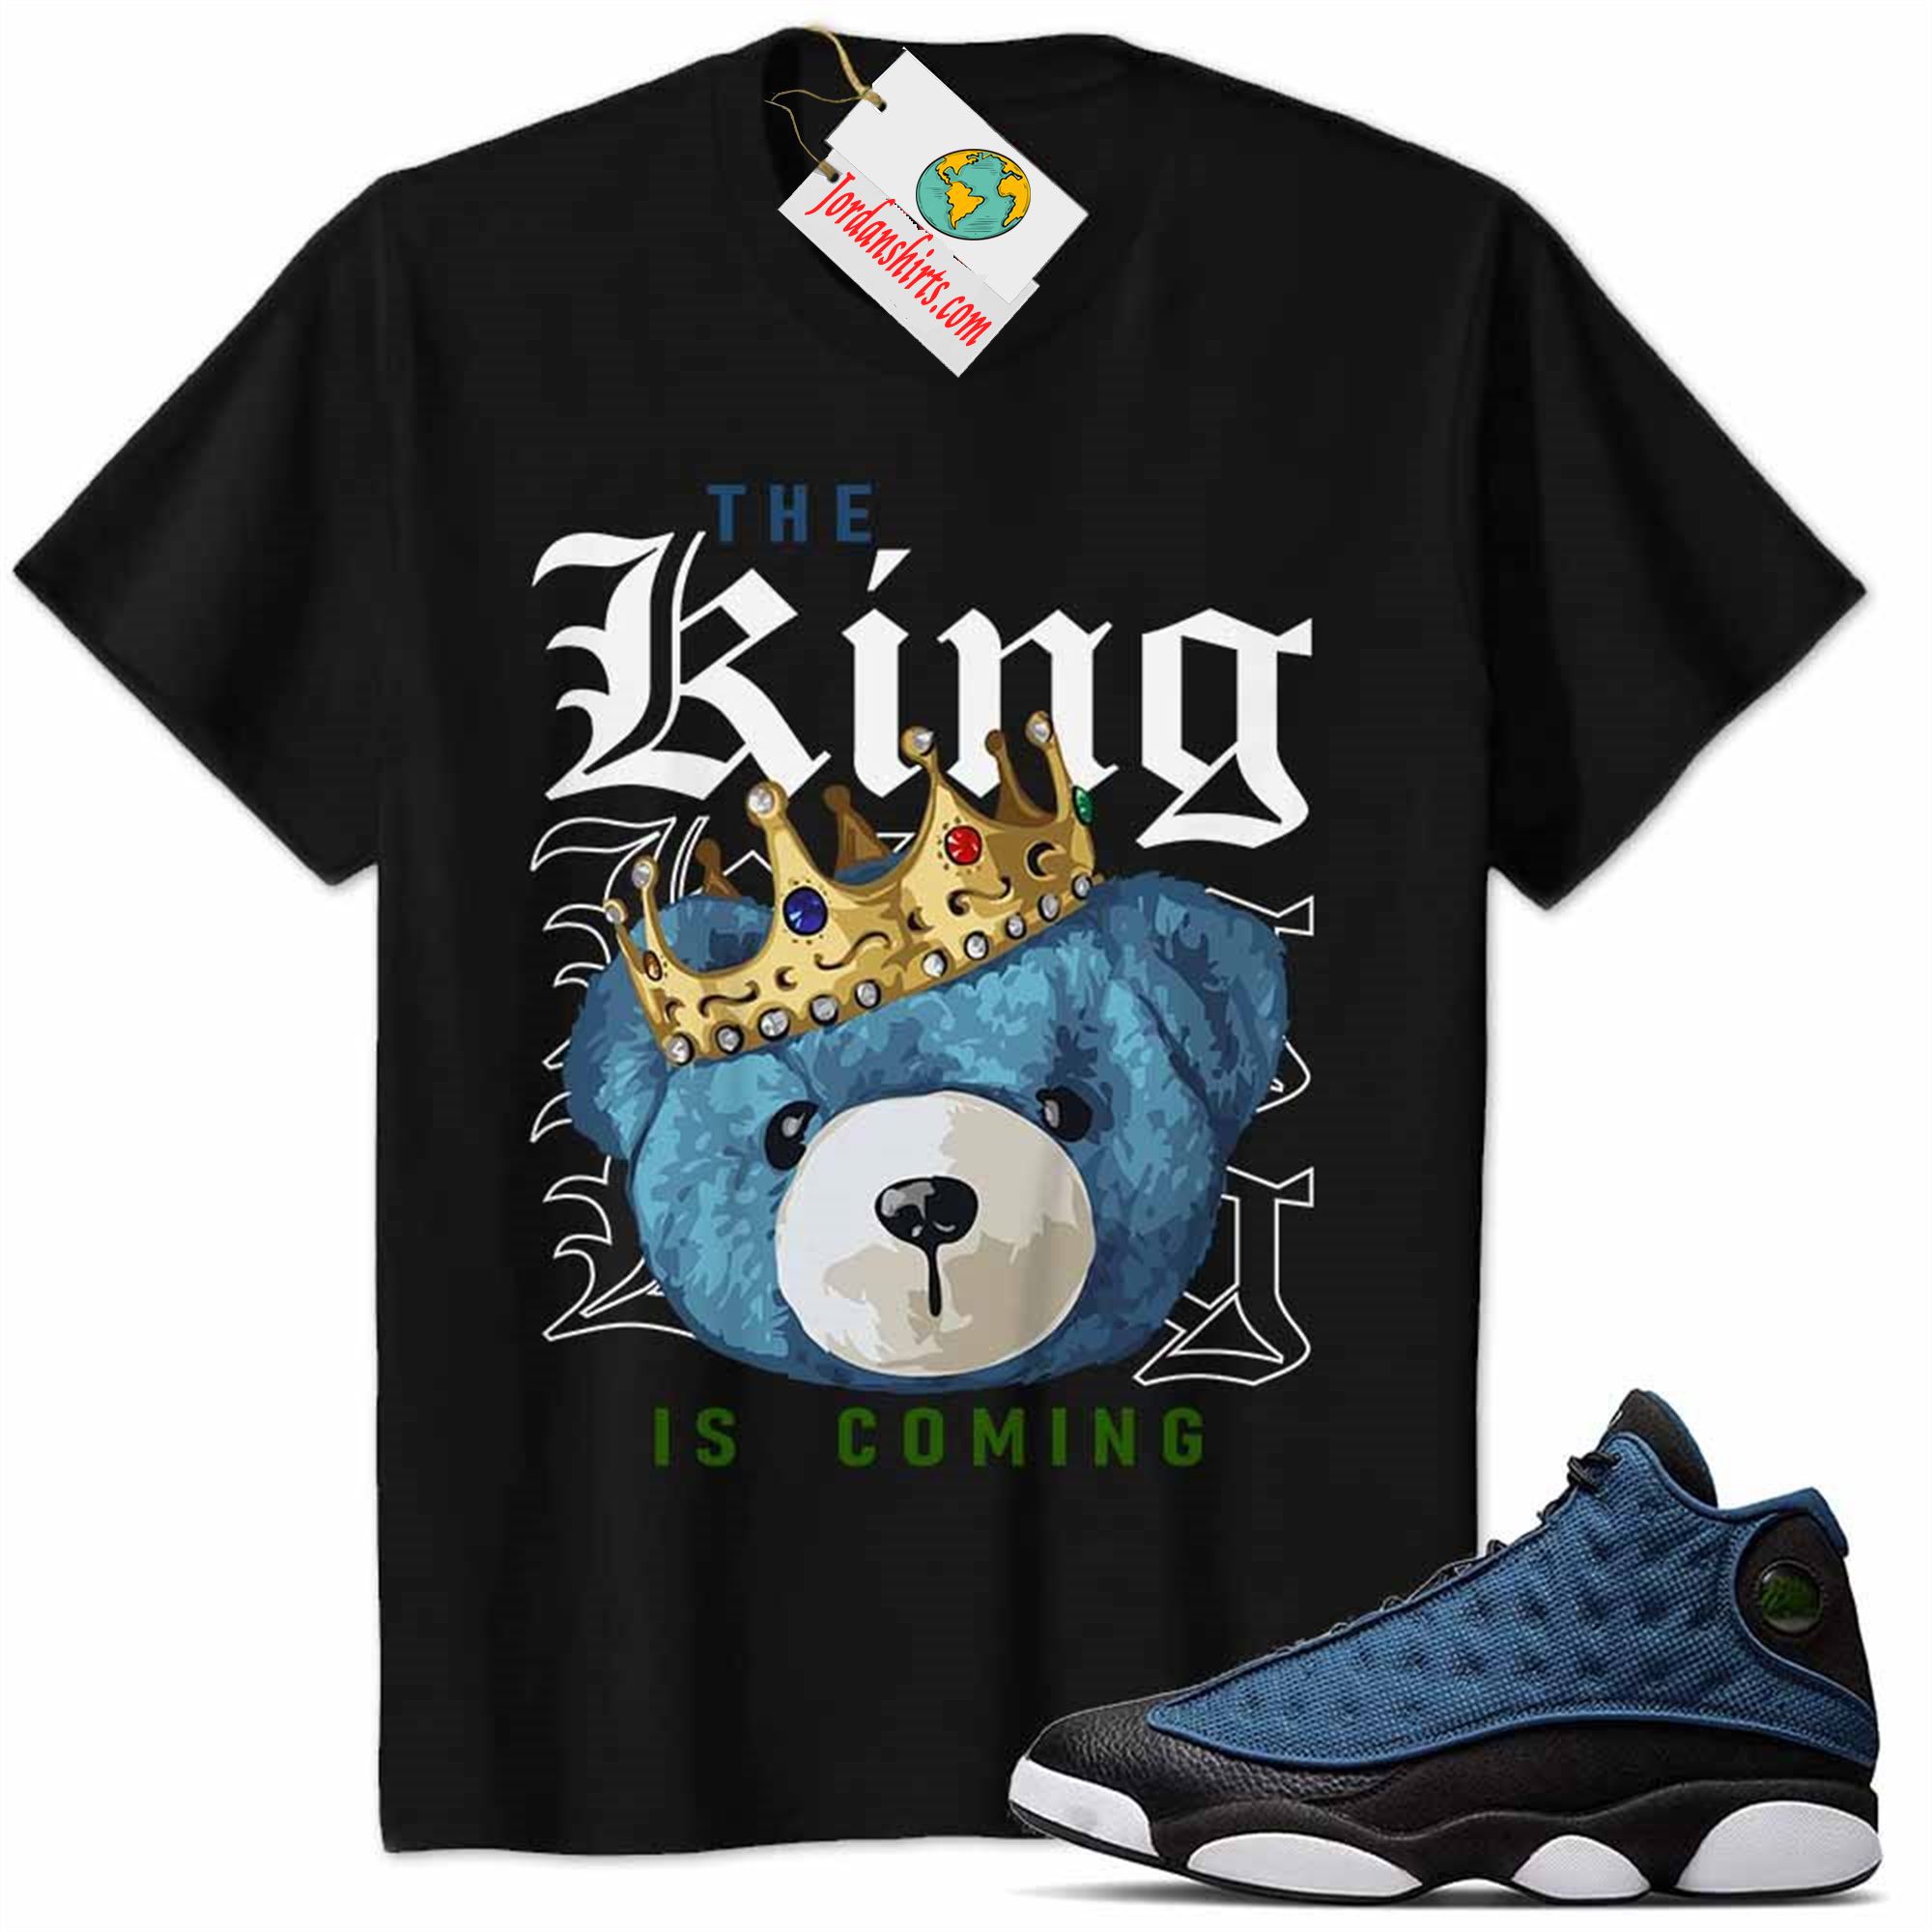 Jordan 13 Shirt, Jordan 13 Brave Blue Shirt The King Teddy Bear Black Size Up To 5xl